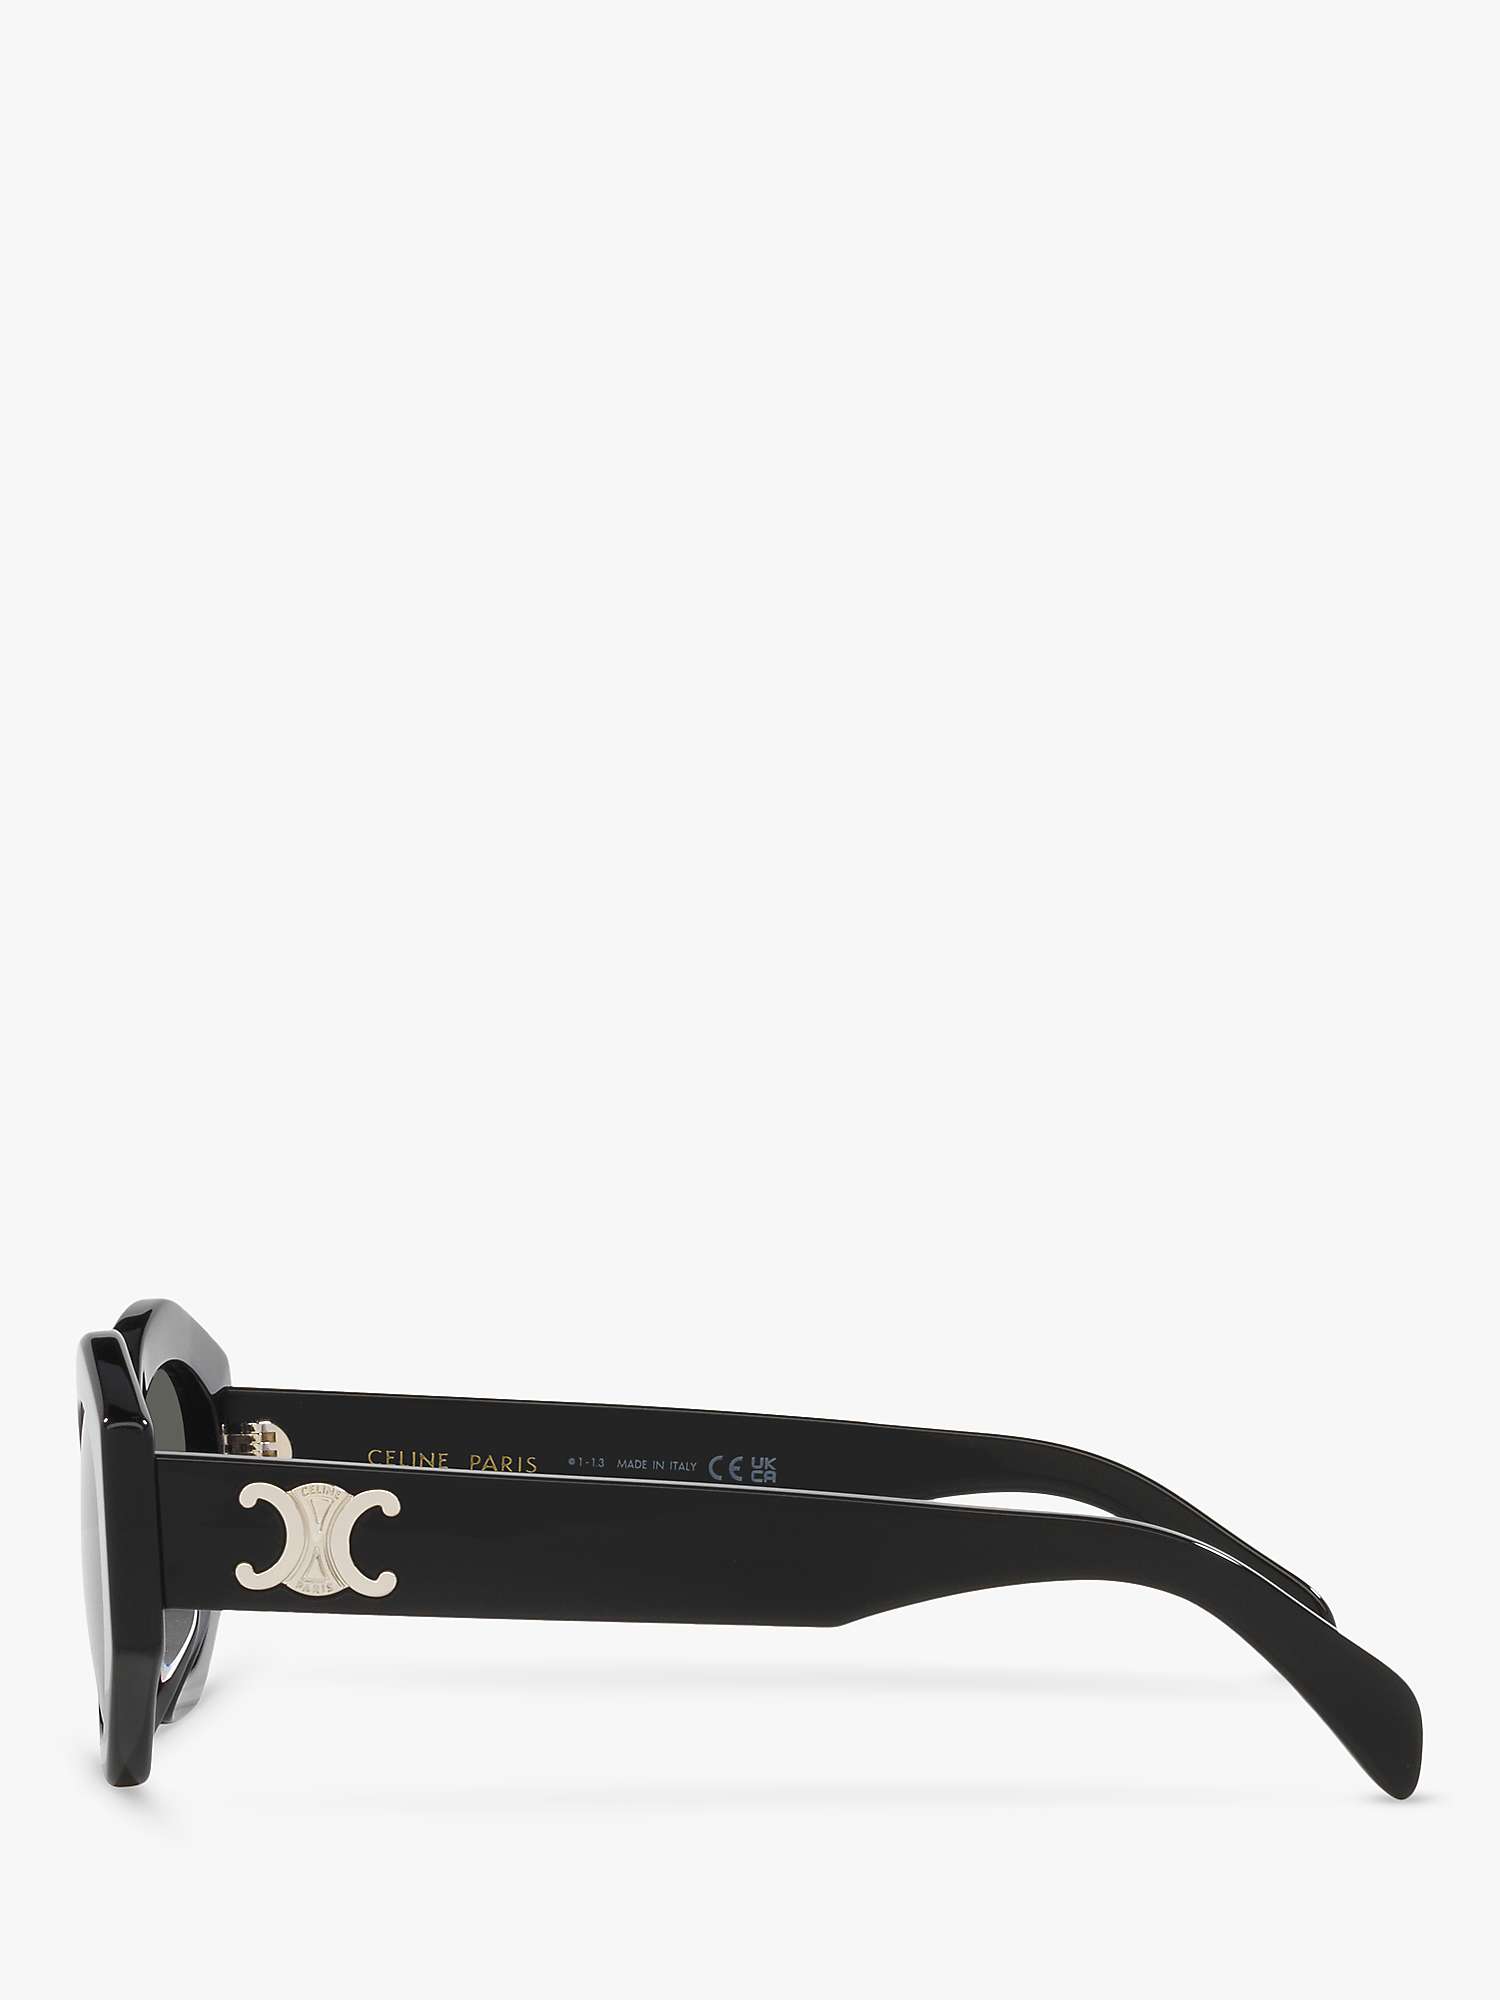 Buy Celine CL40238U Women's Oval Sunglasses, Shiny Black/Grey Online at johnlewis.com